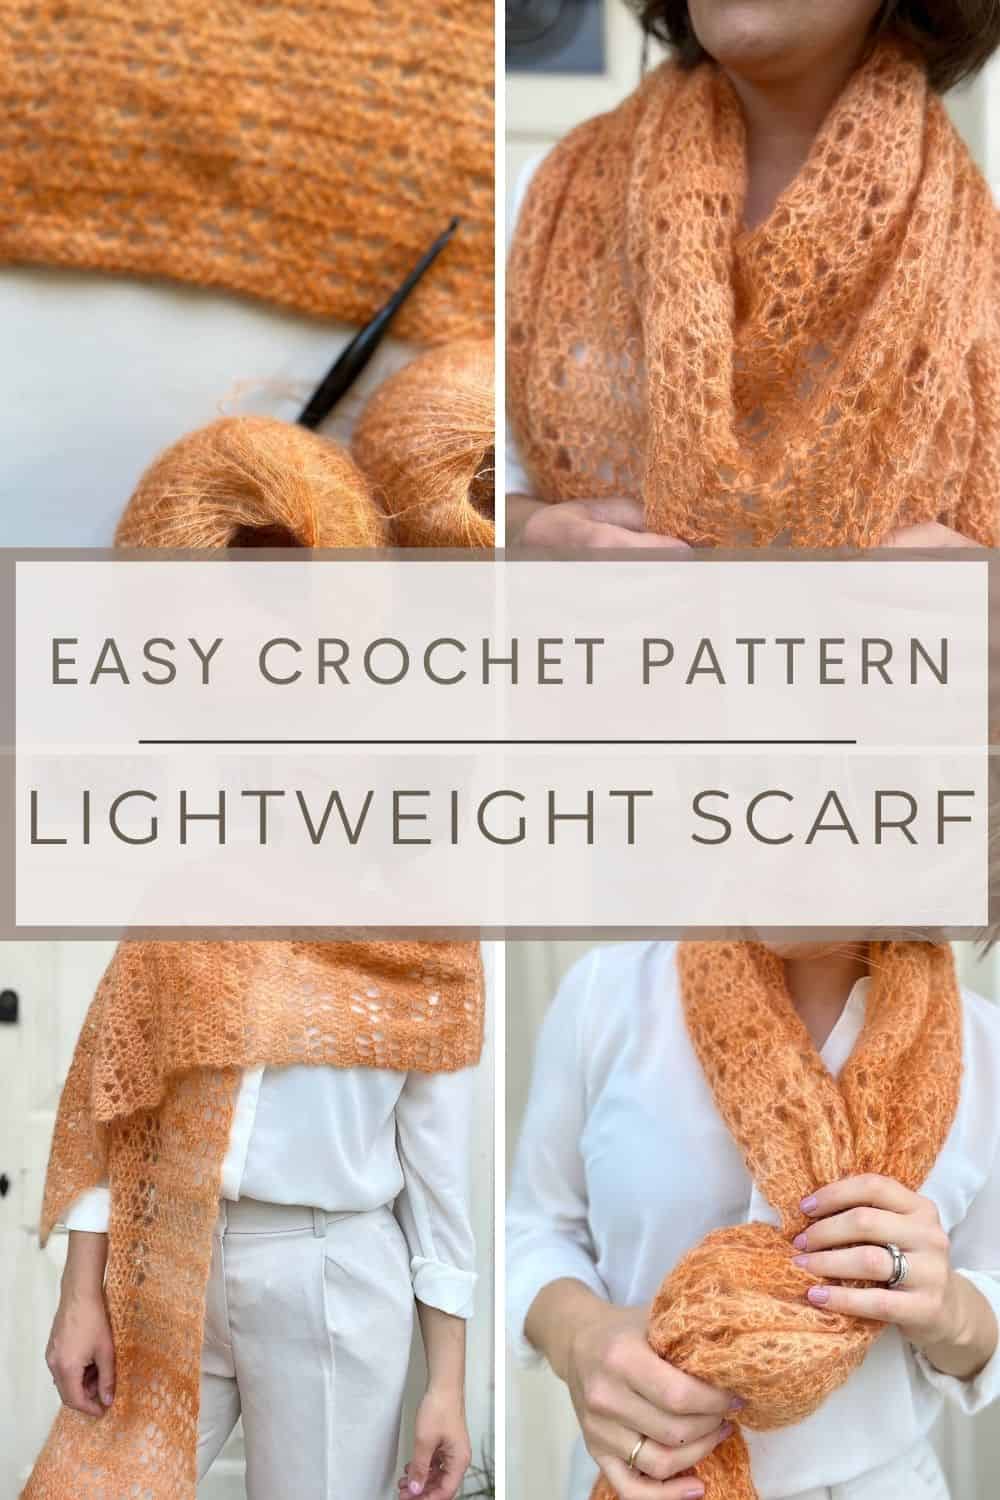 Lightweight crochet shawl for summer pattern with filet crochet detail.